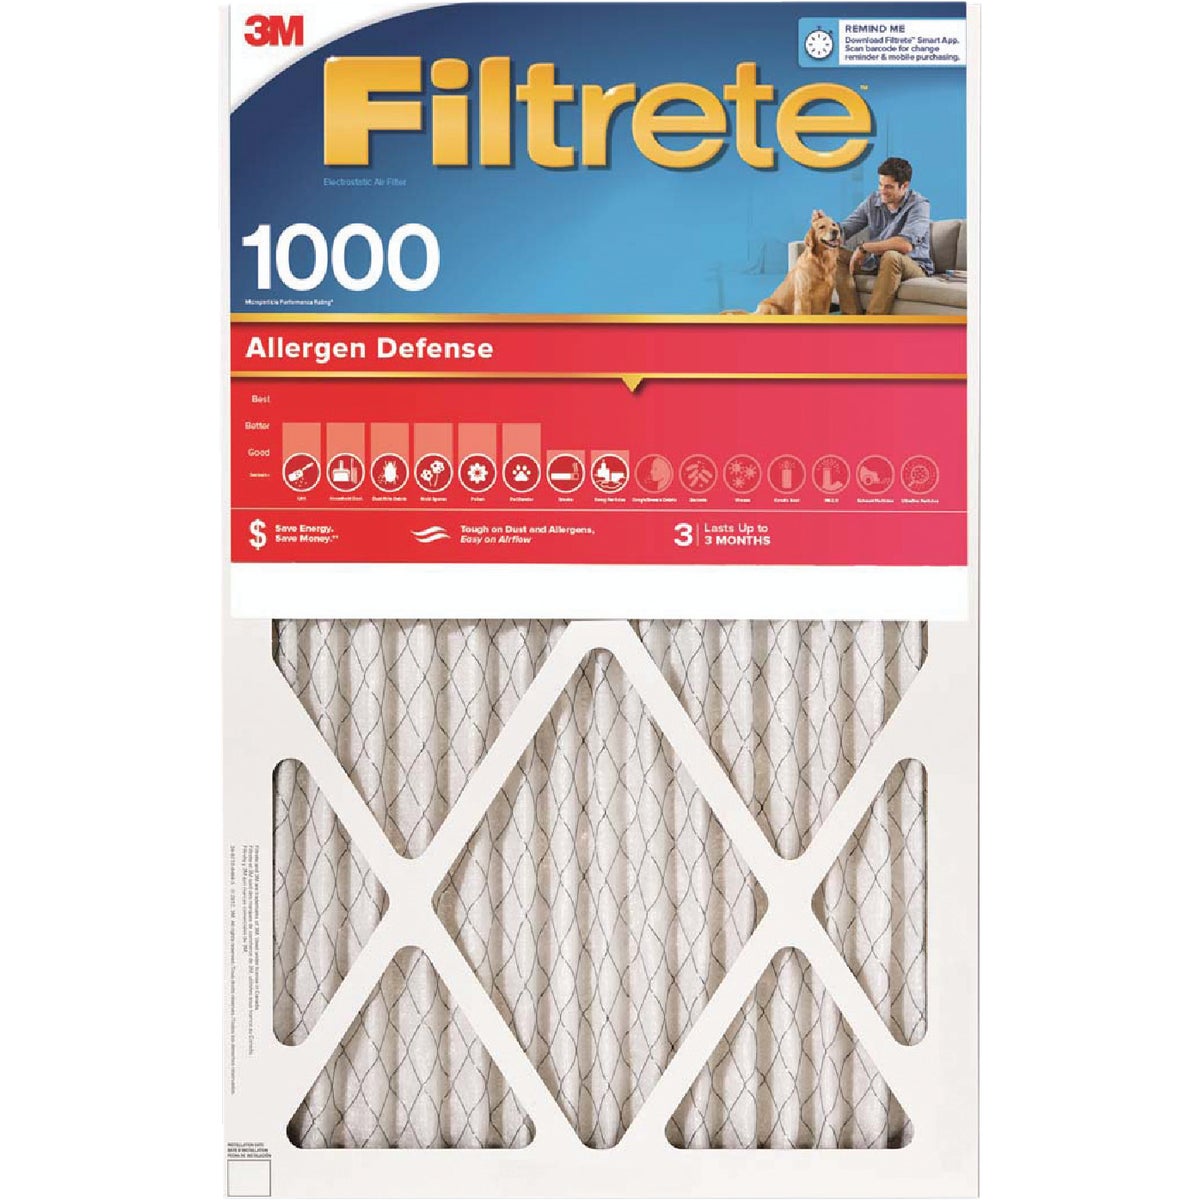 Filtrete 20 In. x 25 In. x 1 In. Allergen Defense 1000/1085 MPR Furnace Filter